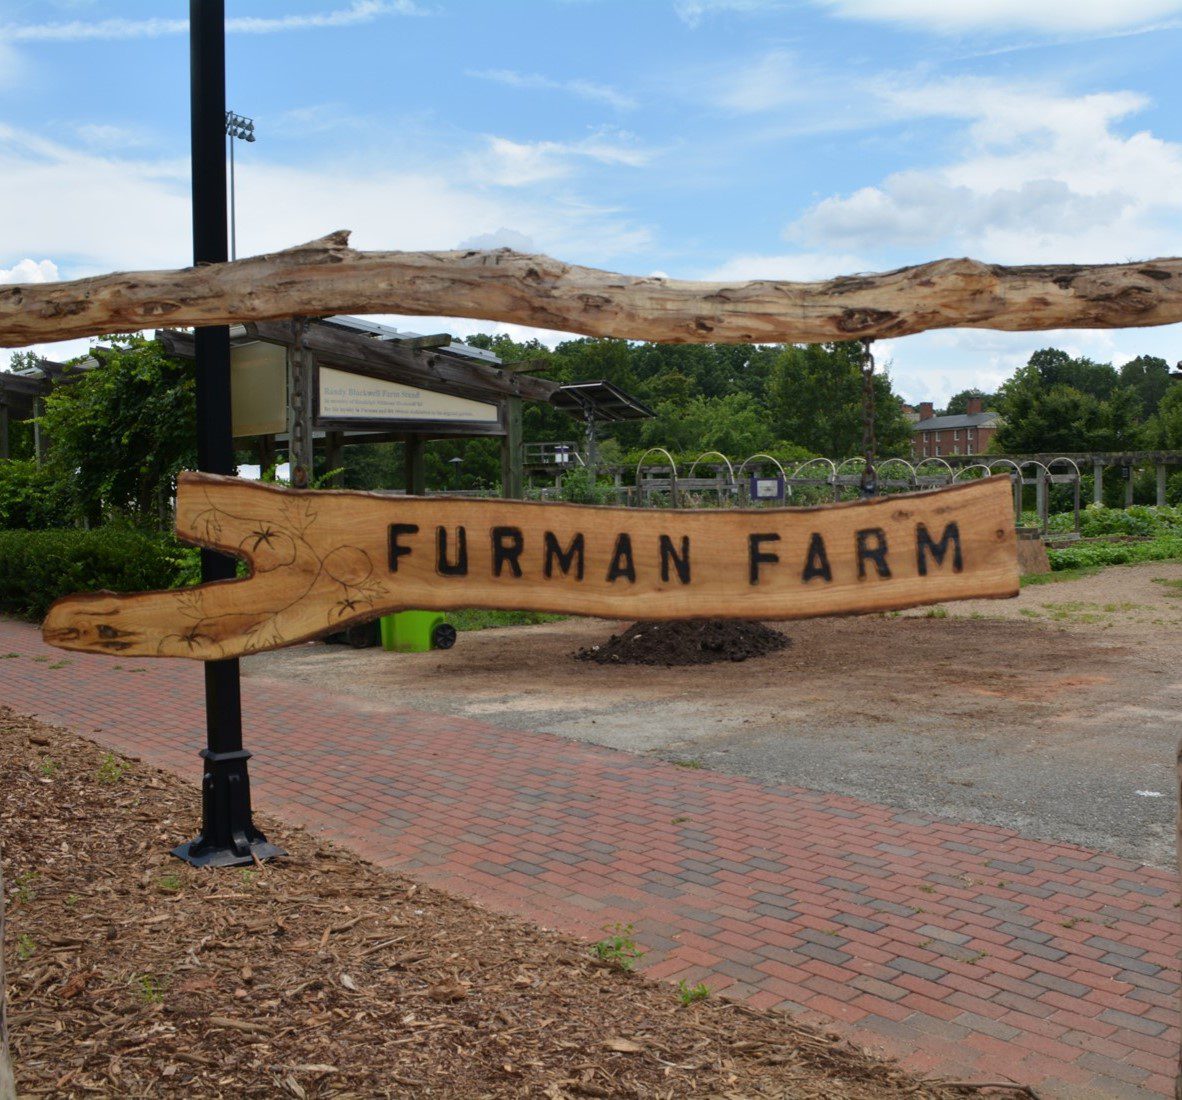 The Furman Farm